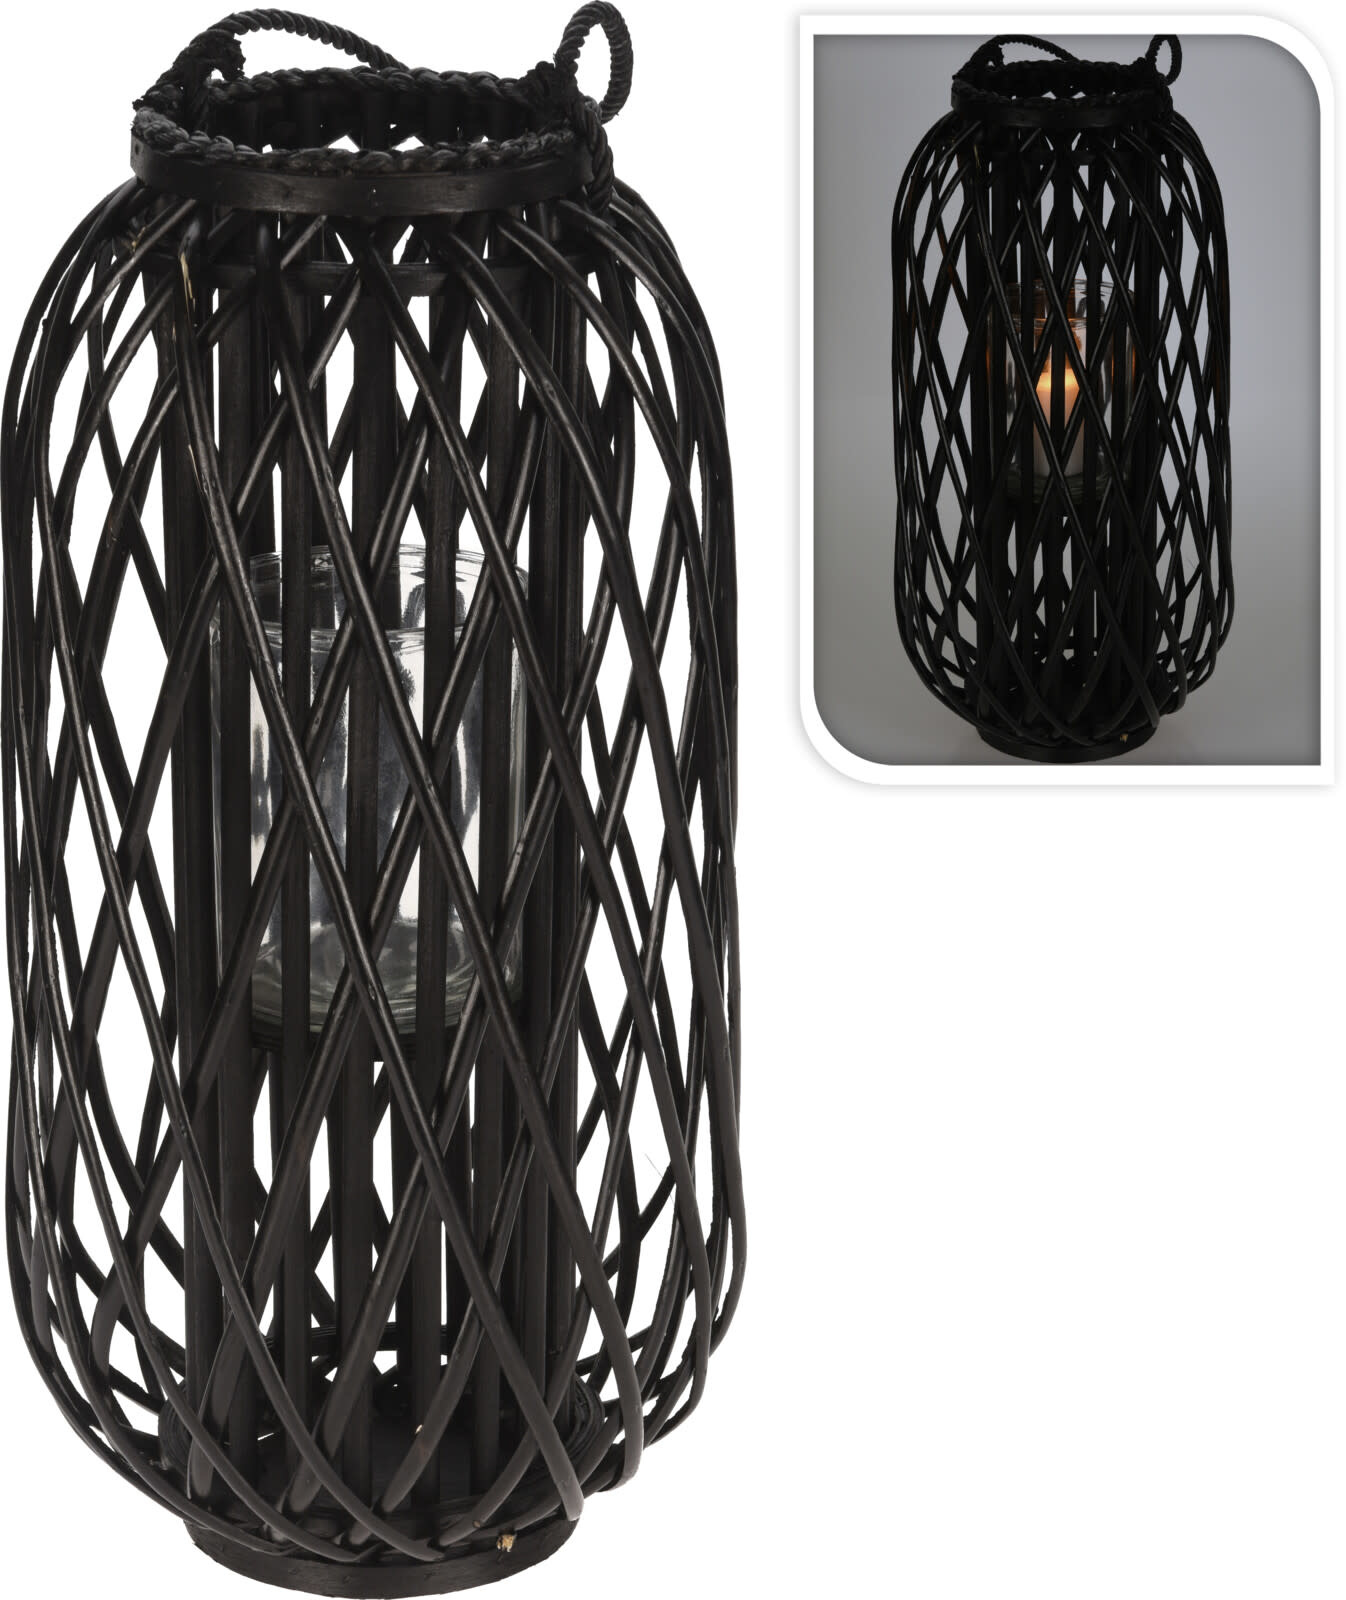 Willow Lantern Black 30x60cm